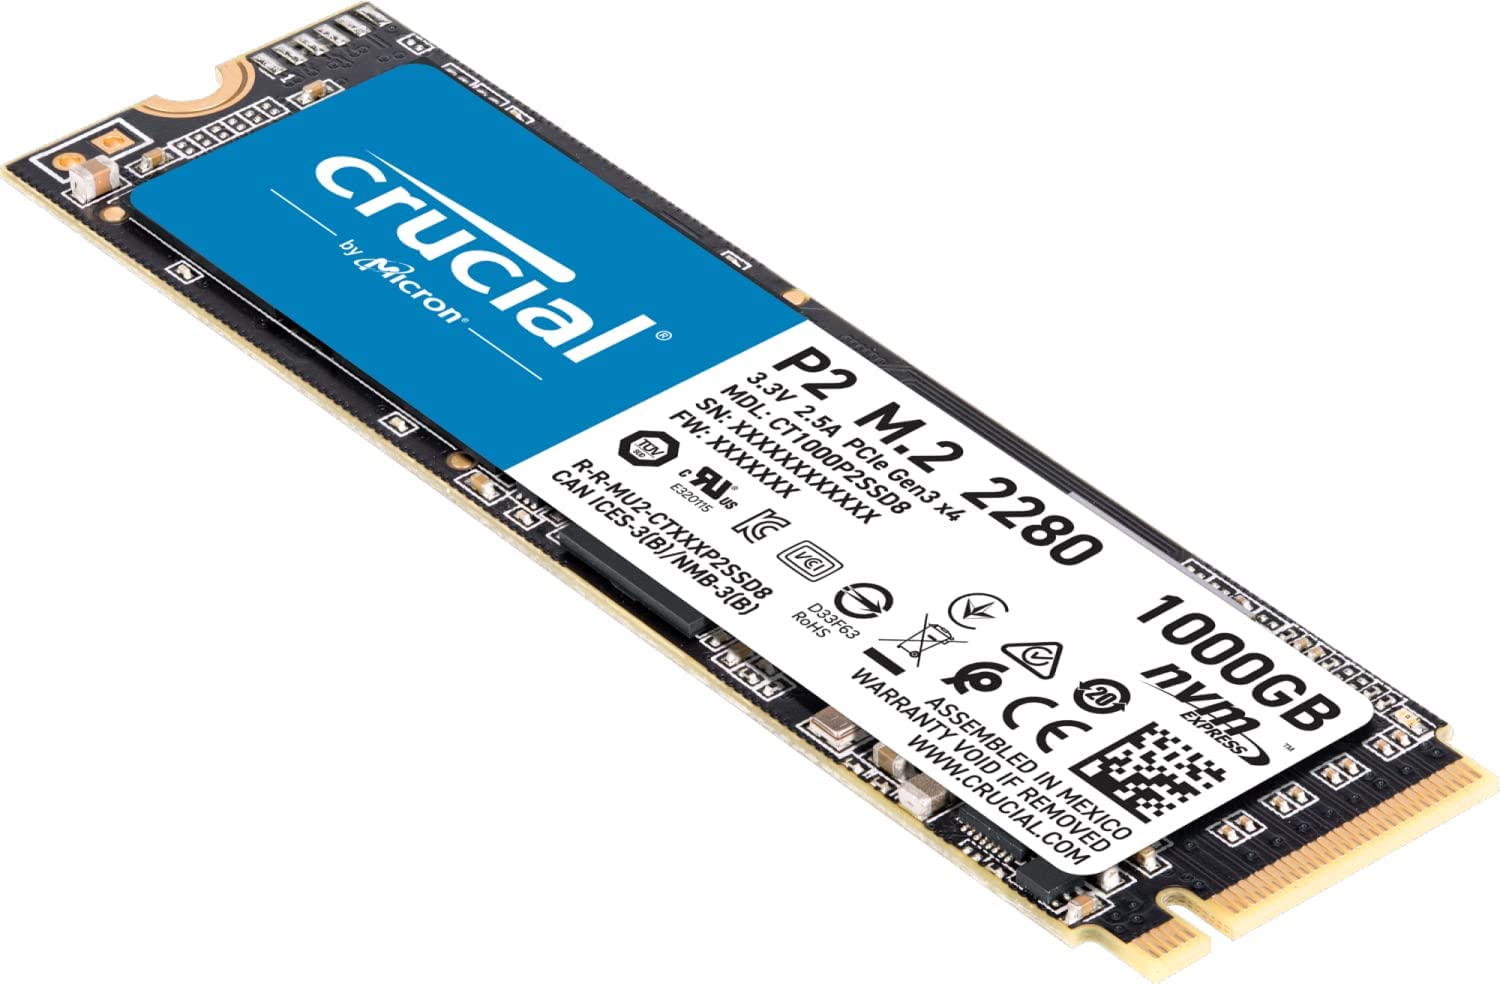 Crucial P2 1TB M.2 PCIe 2280 M.2 SSD